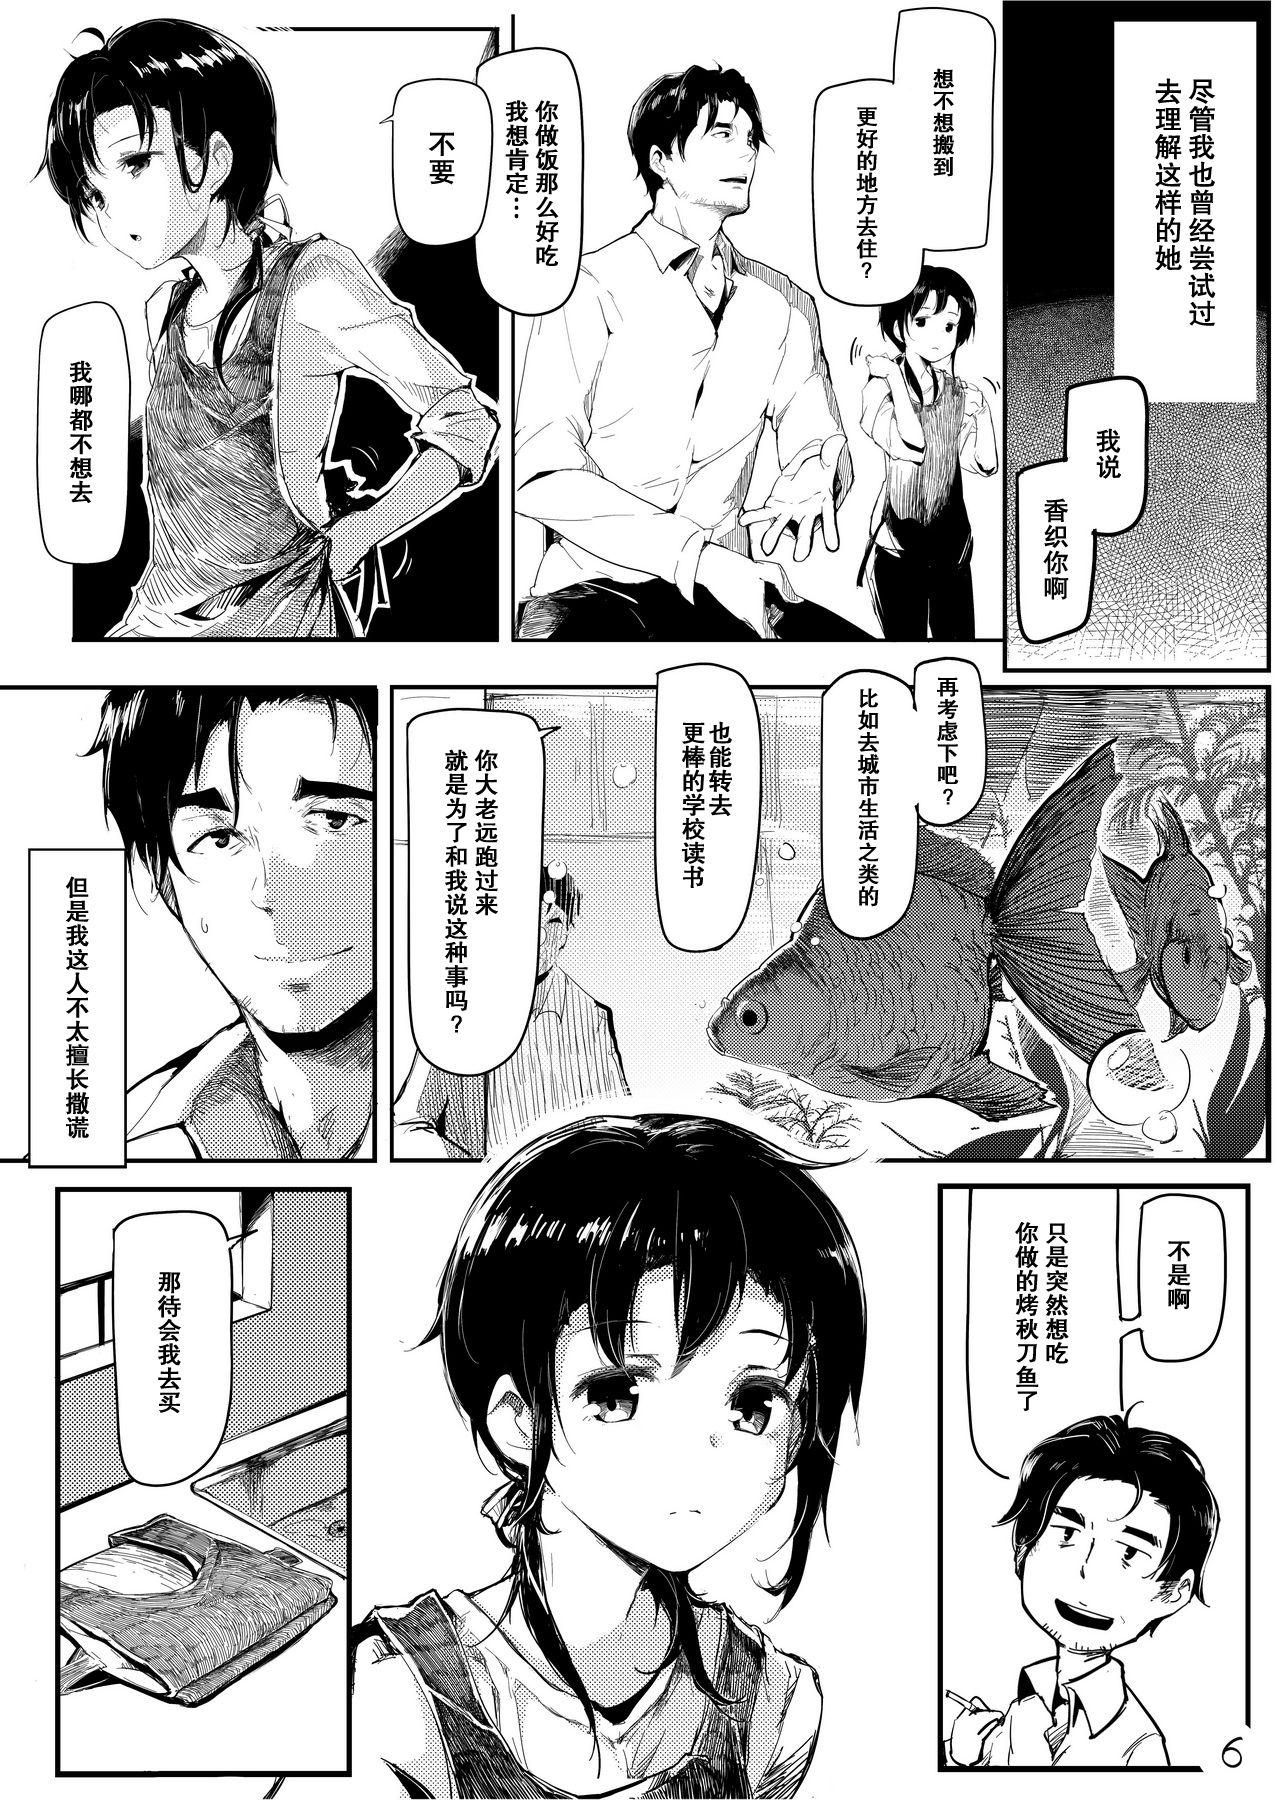 Booty Mijukuna ringo Safadinha - Page 7